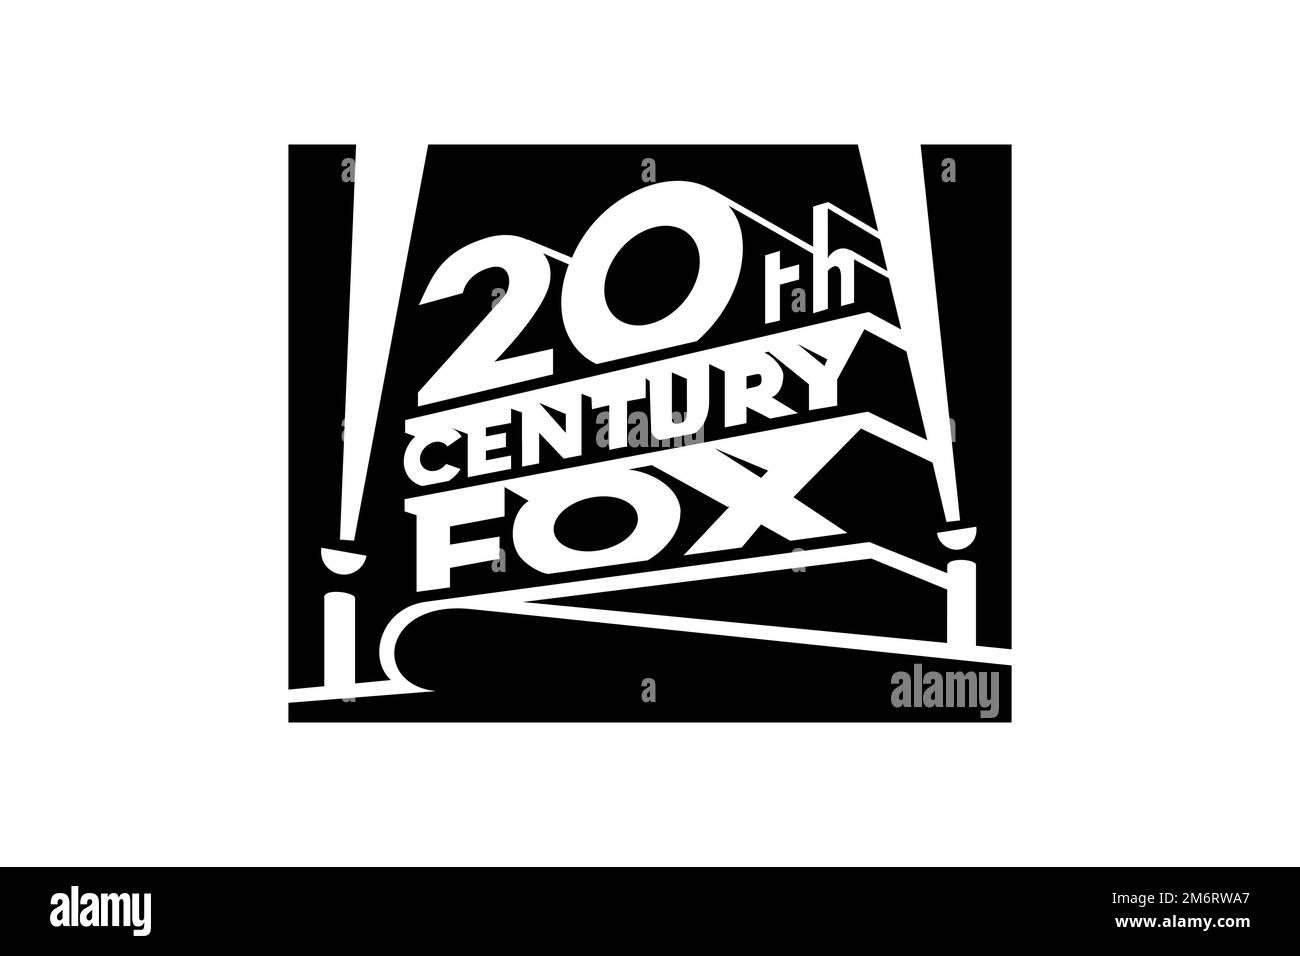 20TH CENTURY FOX LOGO, 20TH CENTURY FOX, 1970 Stock Photo - Alamy